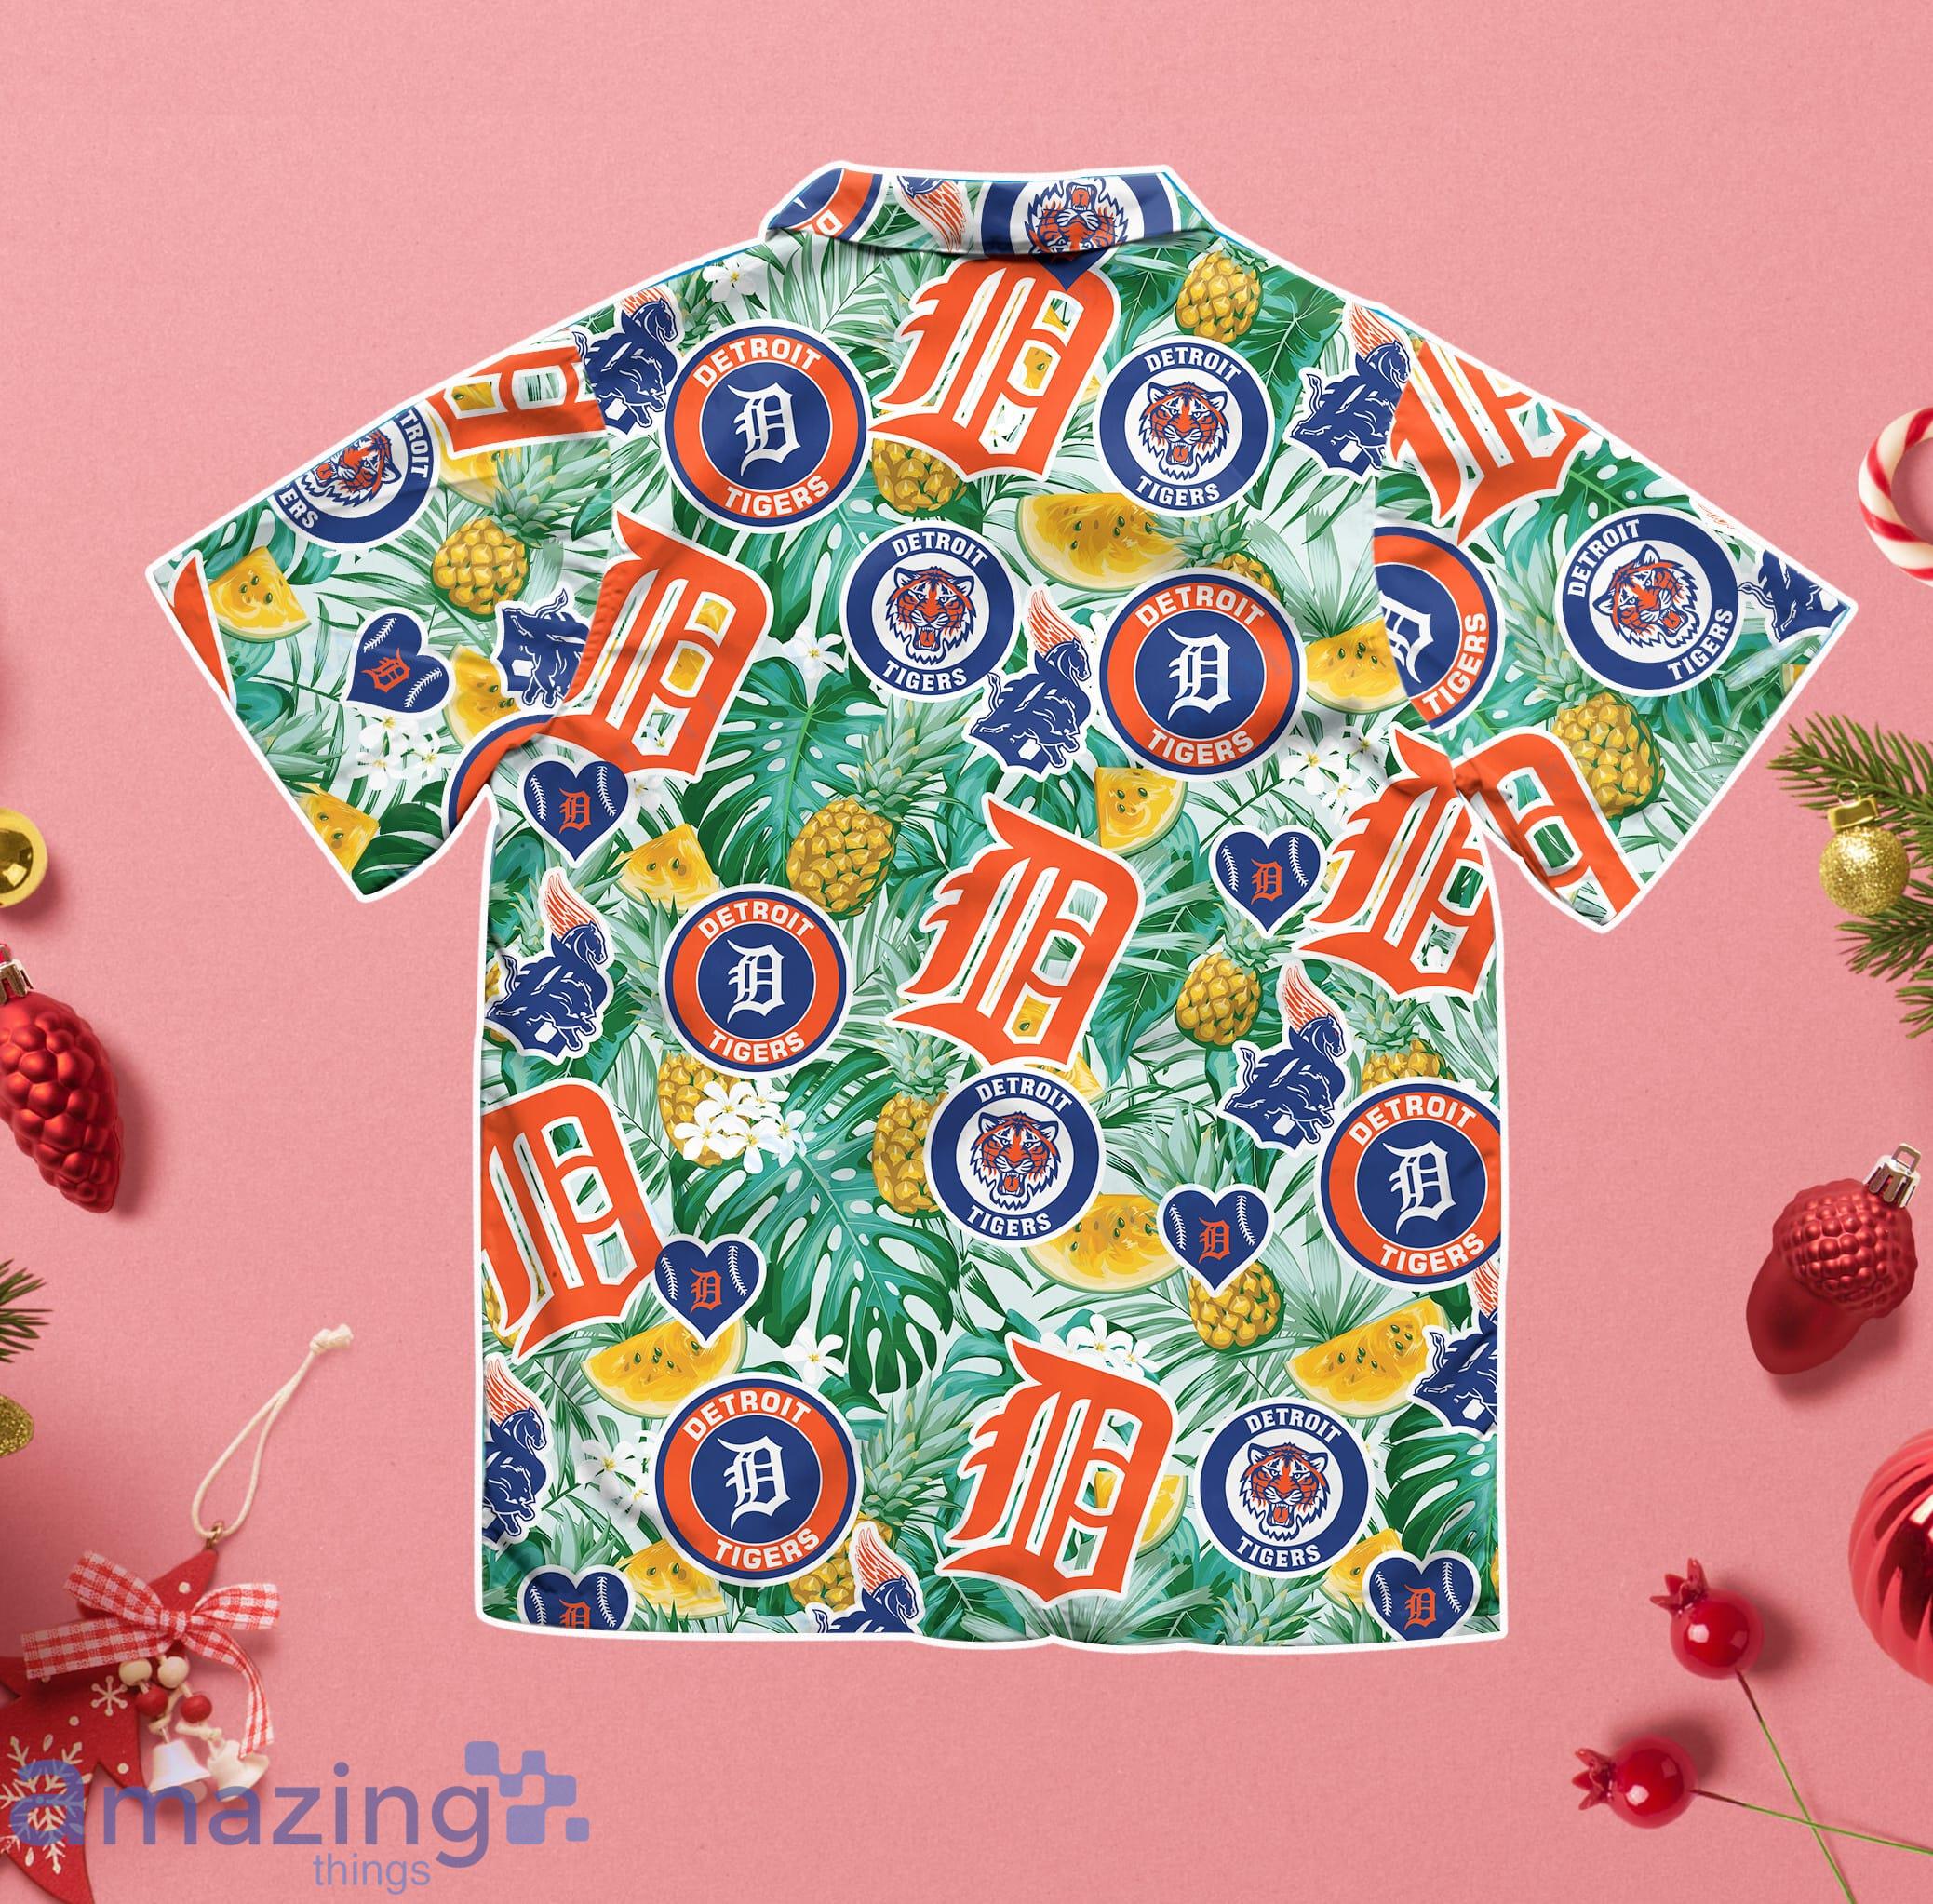 Detroit Tigers Logo Aloha Cute Summer Gift Hawaiian Shirt For Men And Women  - Freedomdesign